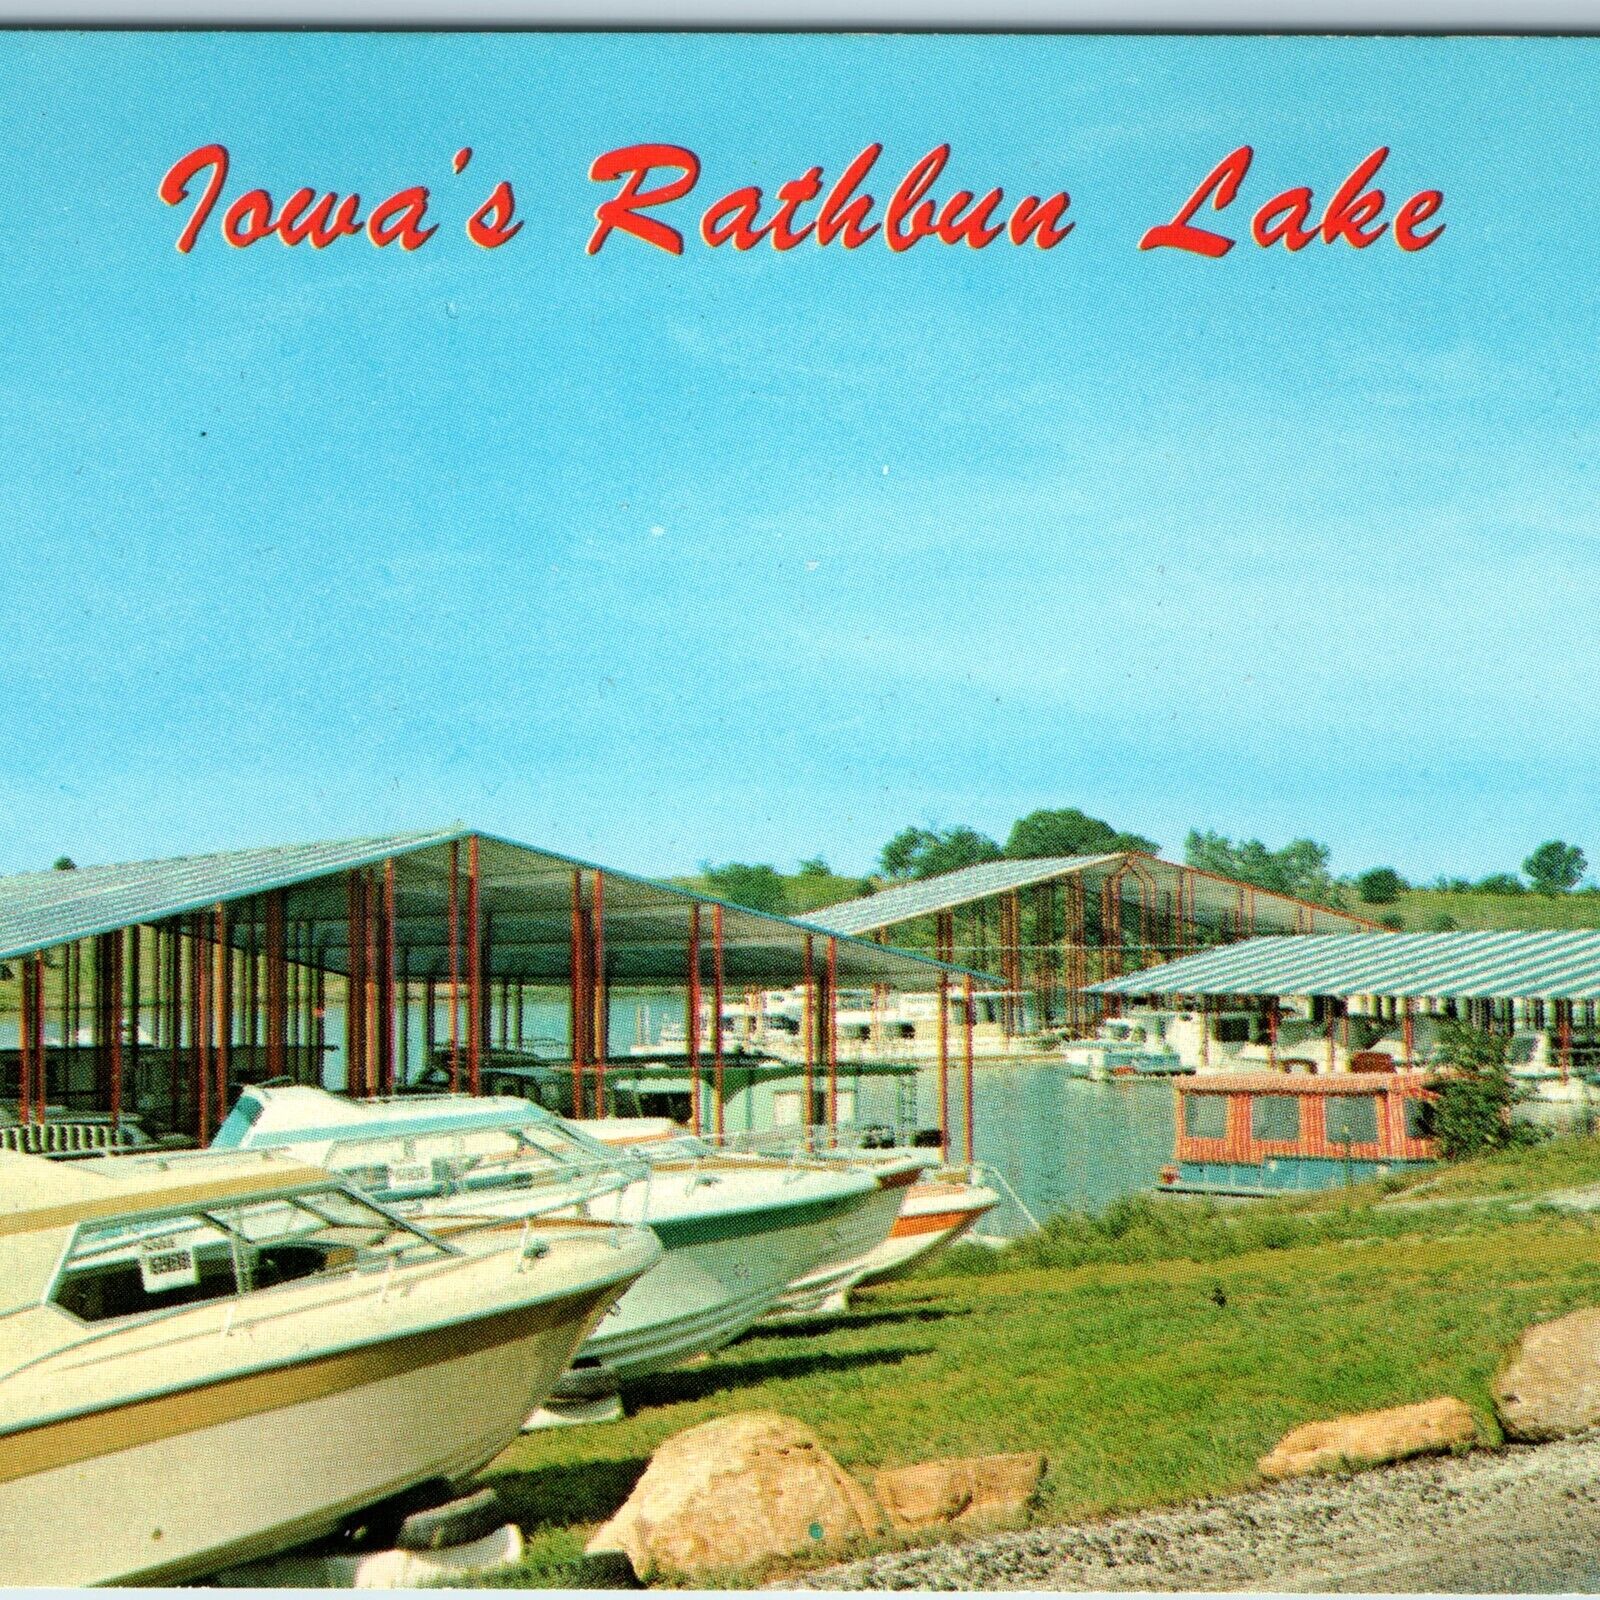 c1960s Moravia, IA Rathbun Lake Anglers Fish Paradise Boats Pollizzie Cee R A198